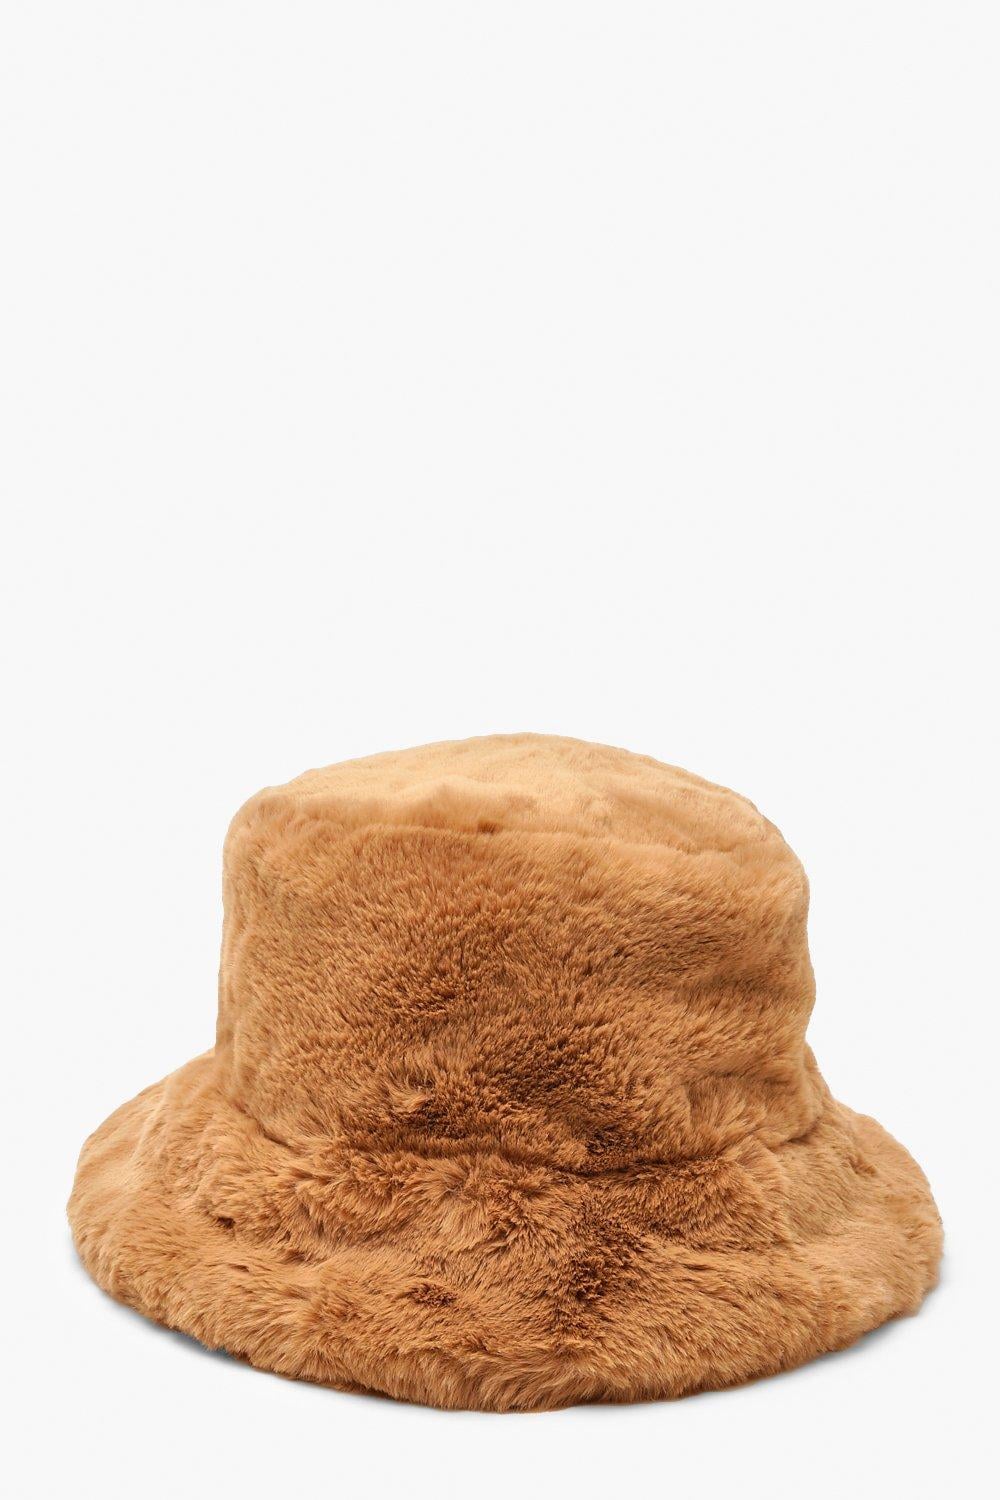 Gigi Hadid's Louis Vuitton Bucket Hat Is Peak Mom-Chic